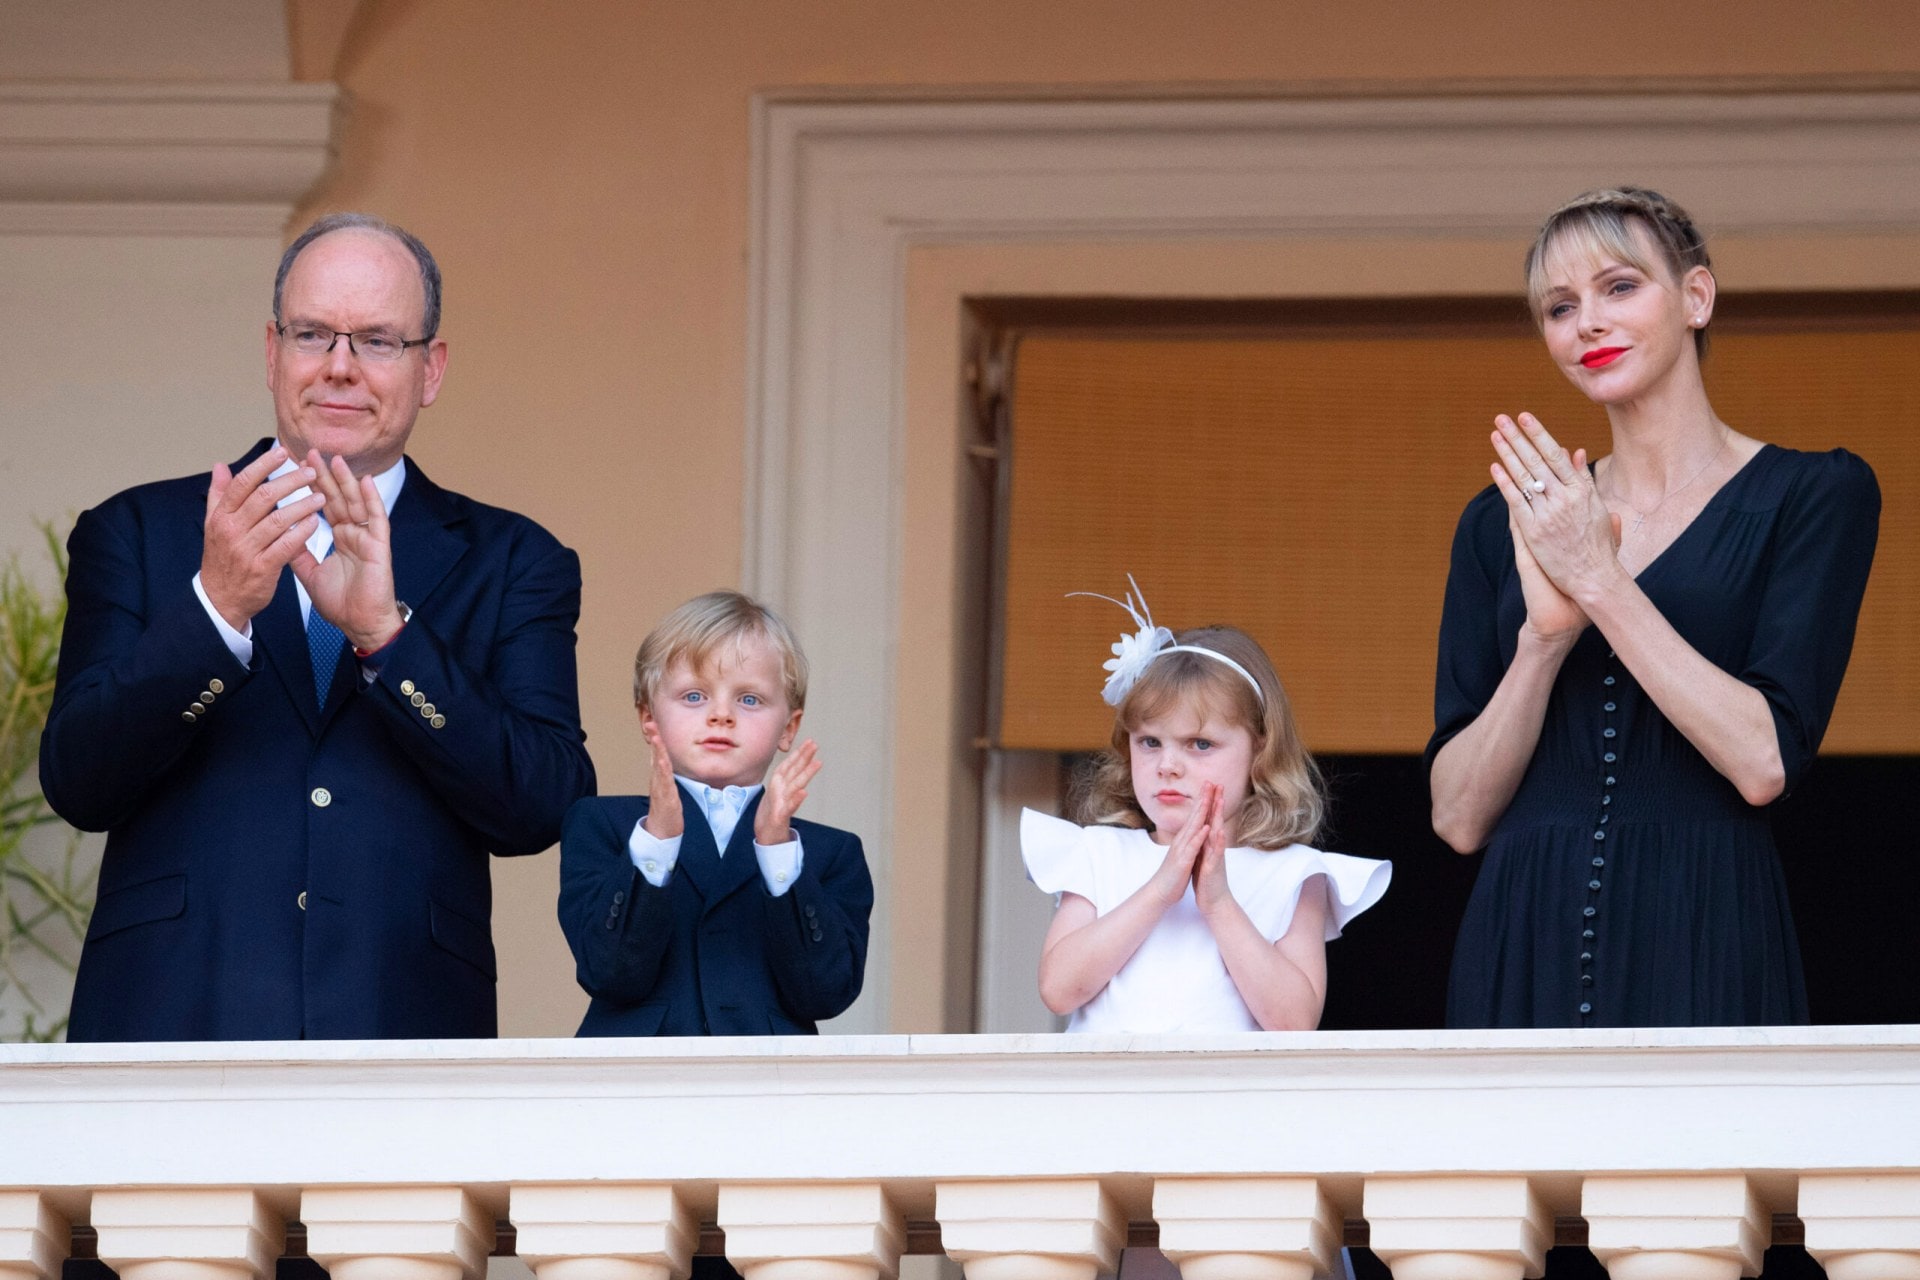 Princess Charlene and Prince Albert alongside their children at Monaco’s Fête de la Saint-Jean 